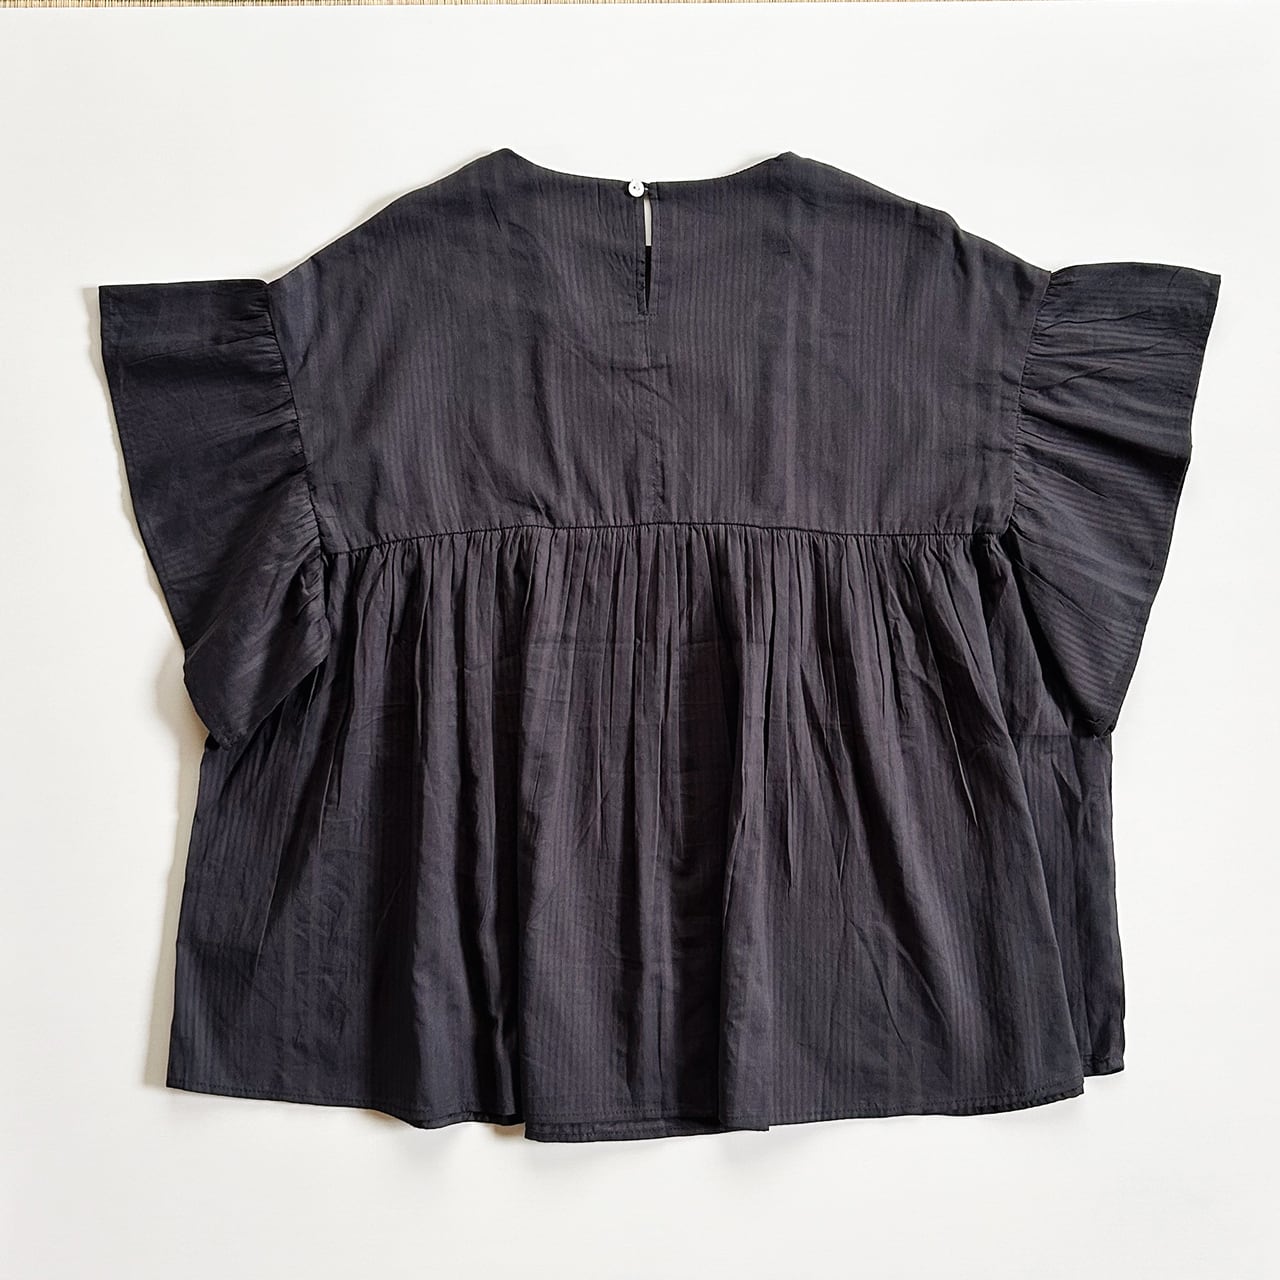 Cotton dobby gather blouse (charcoal)